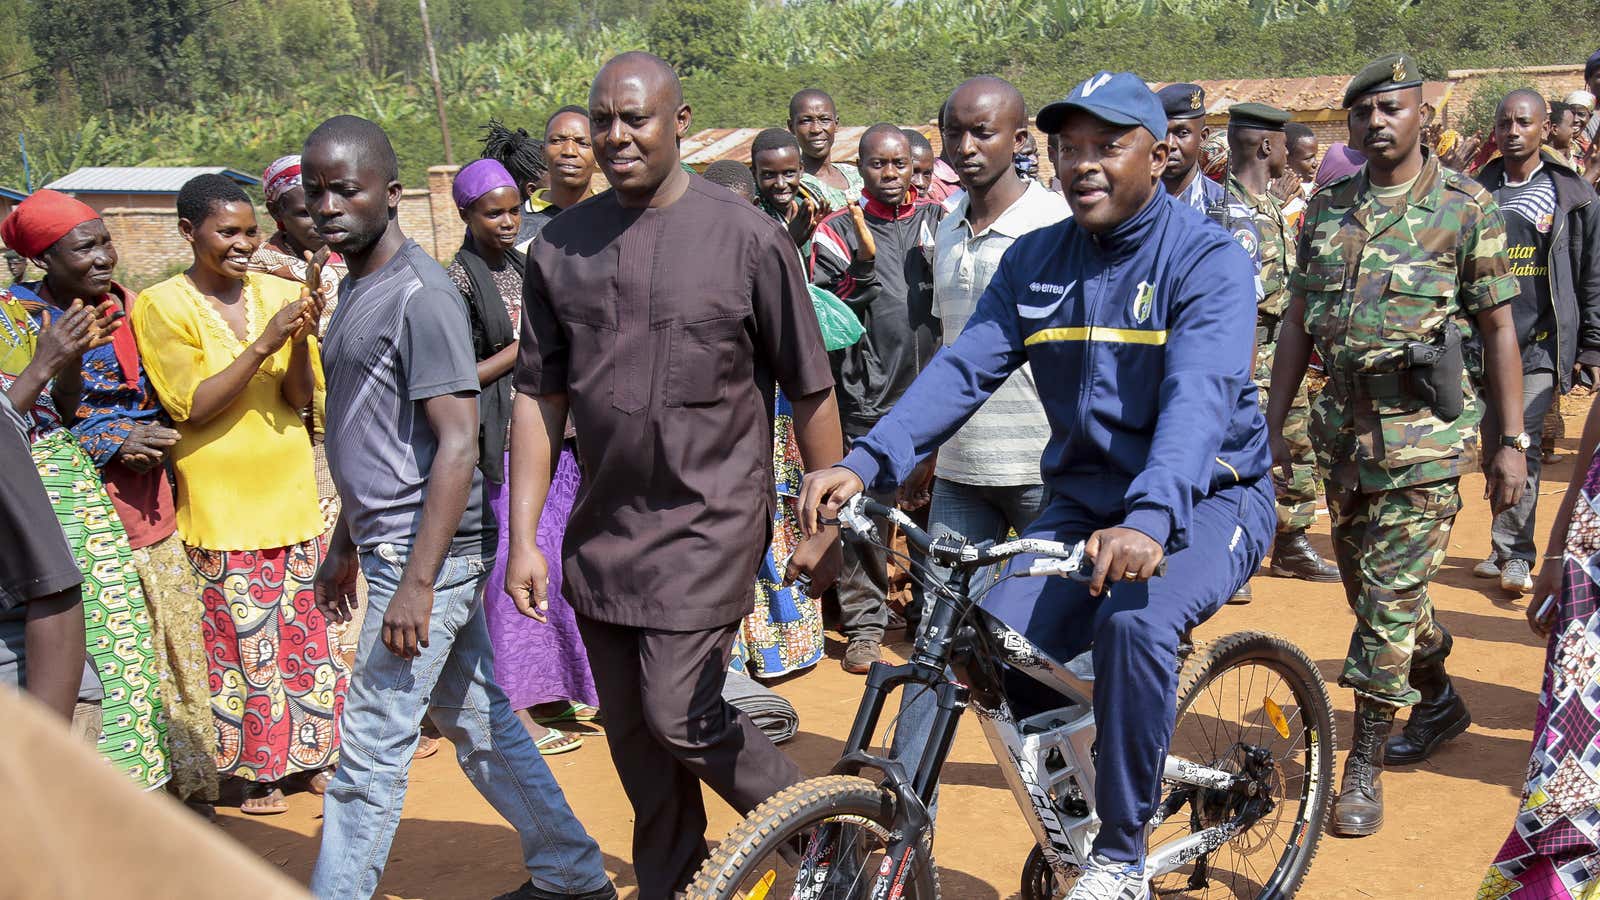 Burundi’s Nkurunziza arrives by bicycle to cast his vote in his home province, Ngozi, in Burundi.